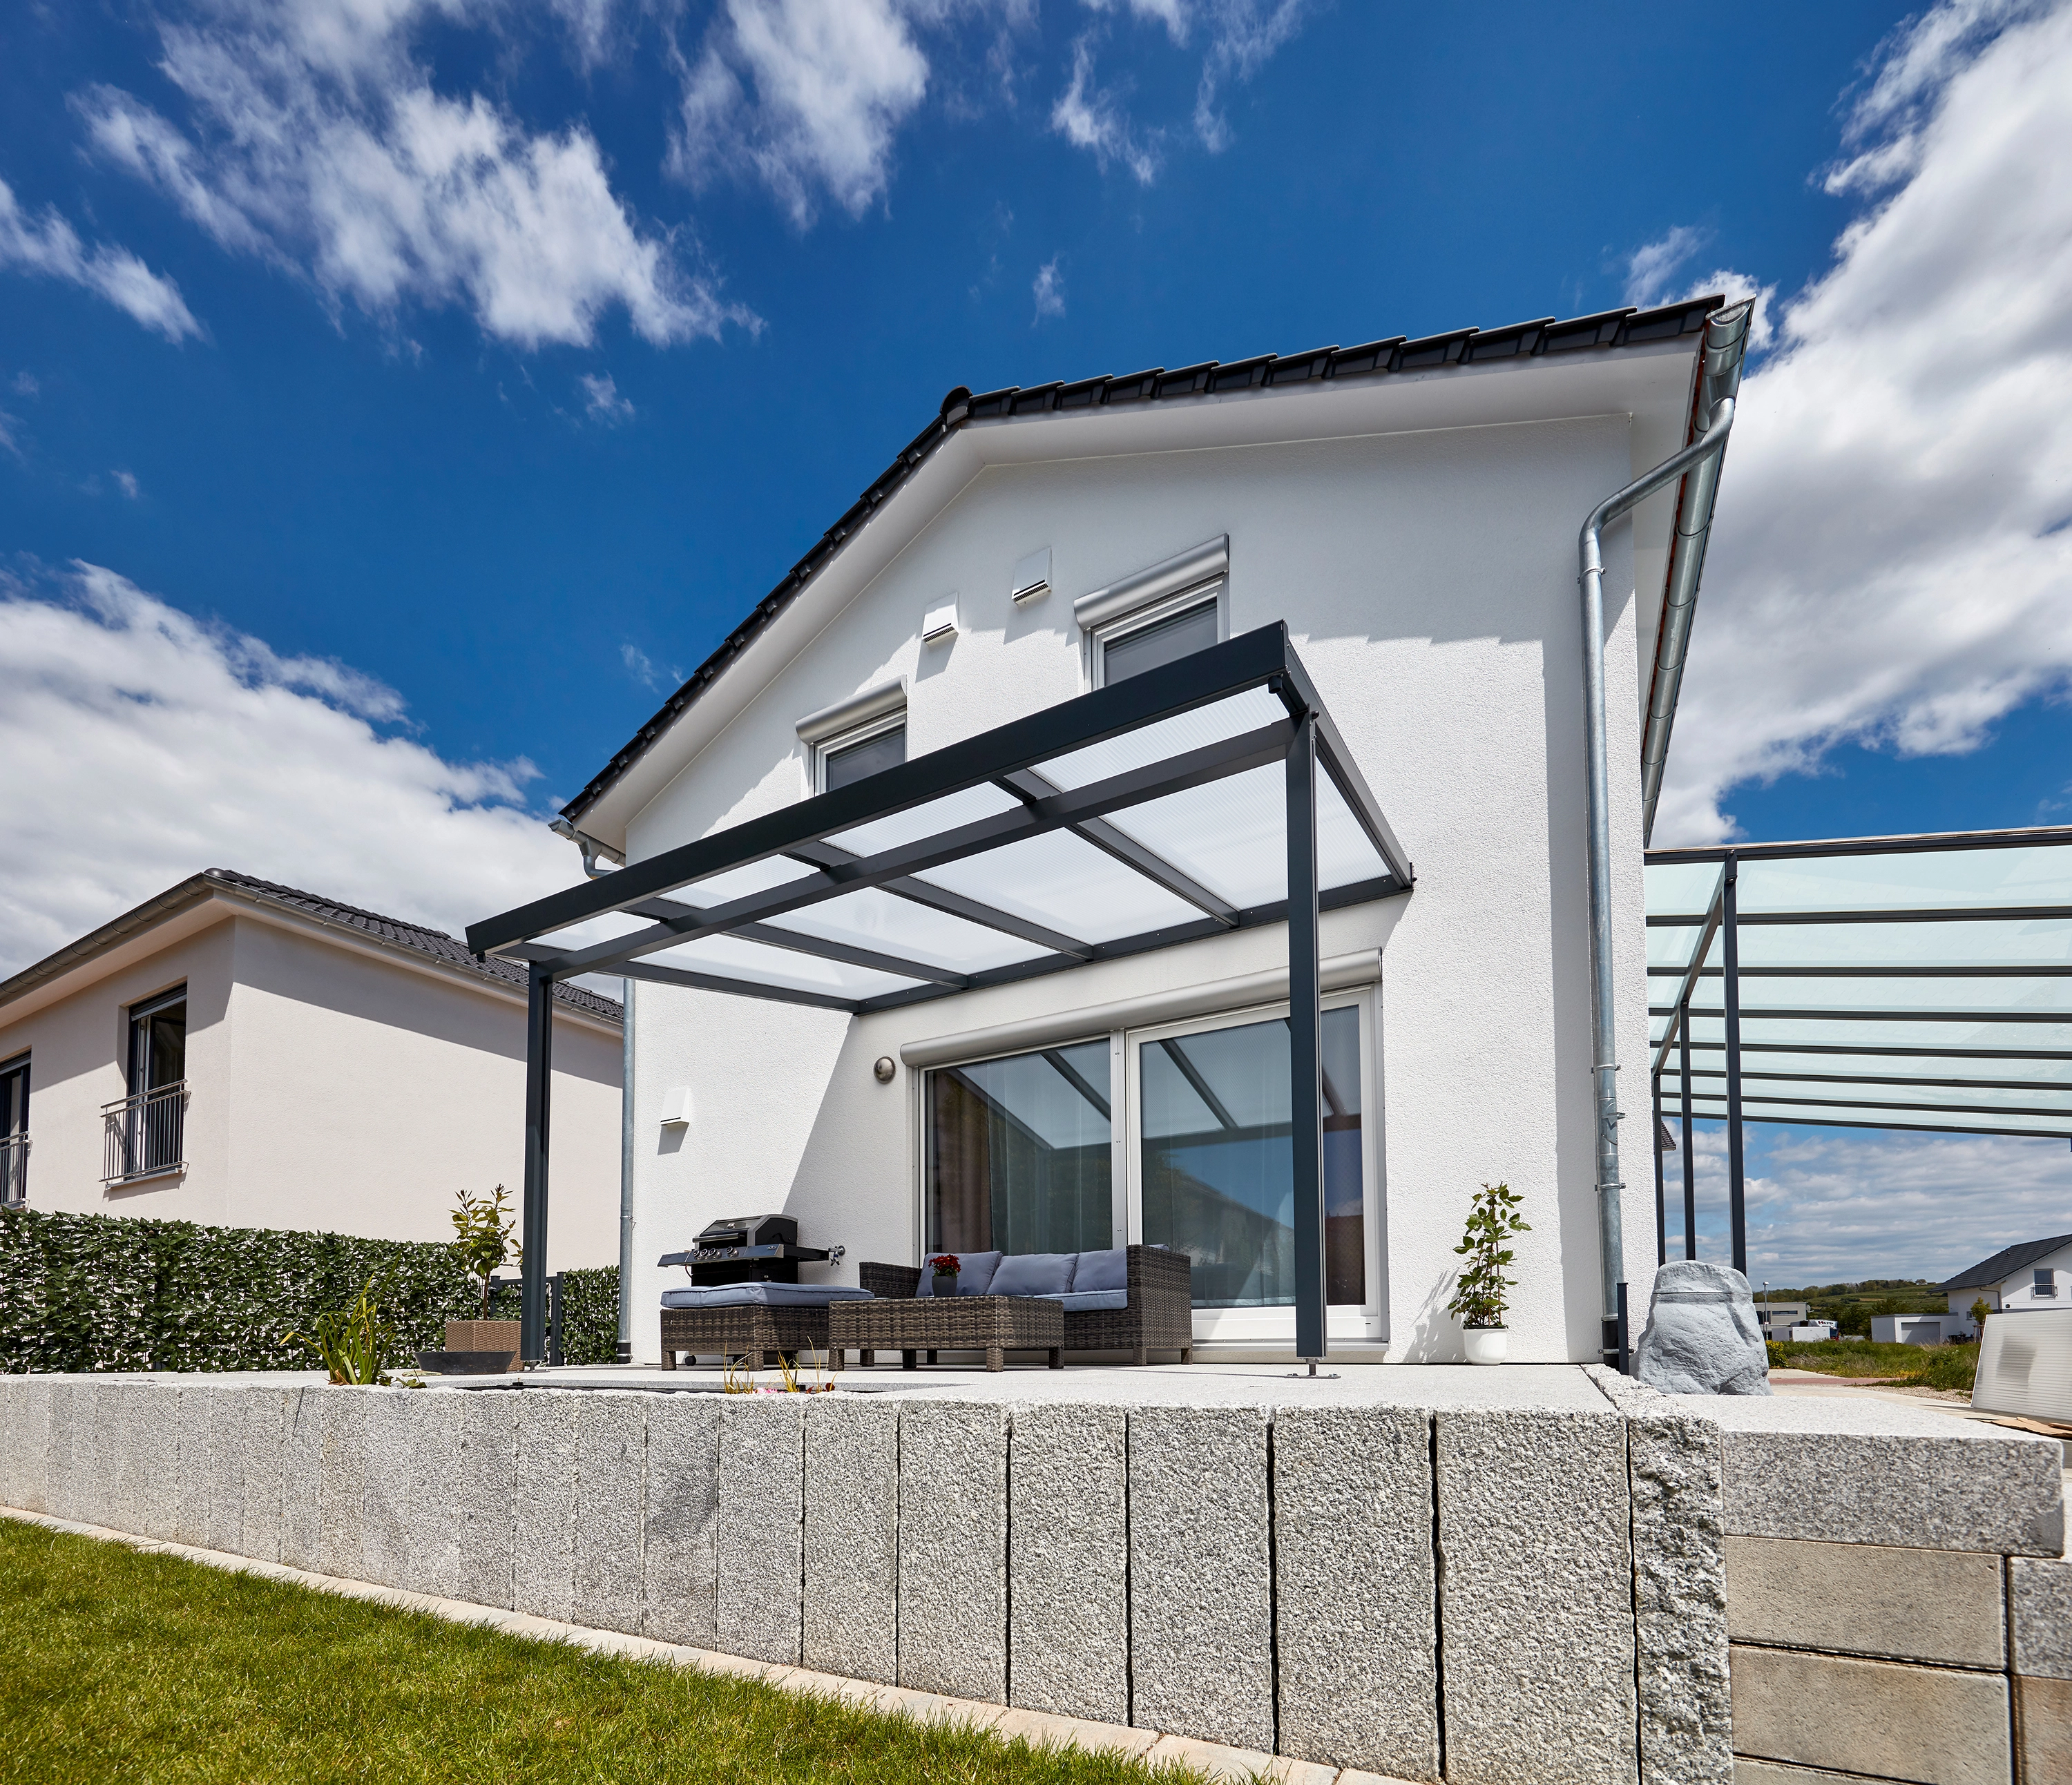 Terrassenüberdachung Premium (BxT) 309 cm x 306 cm Anthrazit Polycarbonat  Opal kaufen bei OBI